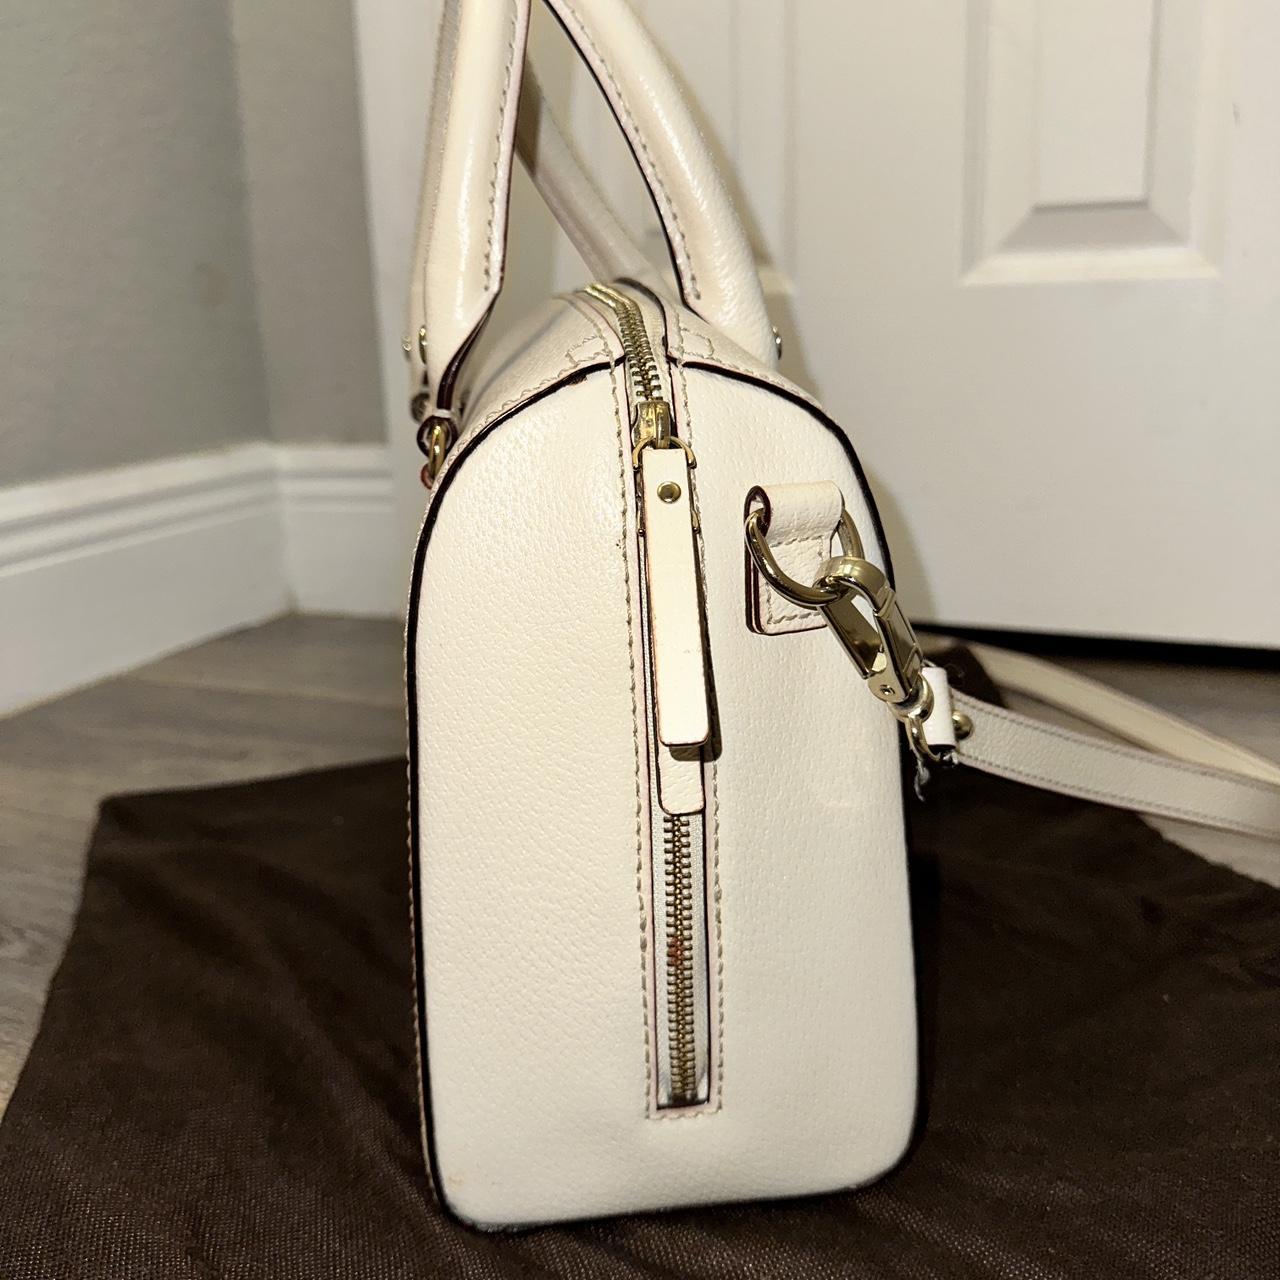 Kate Spade Black and Cream - Pebbled Leather Tote Handbag | eBay